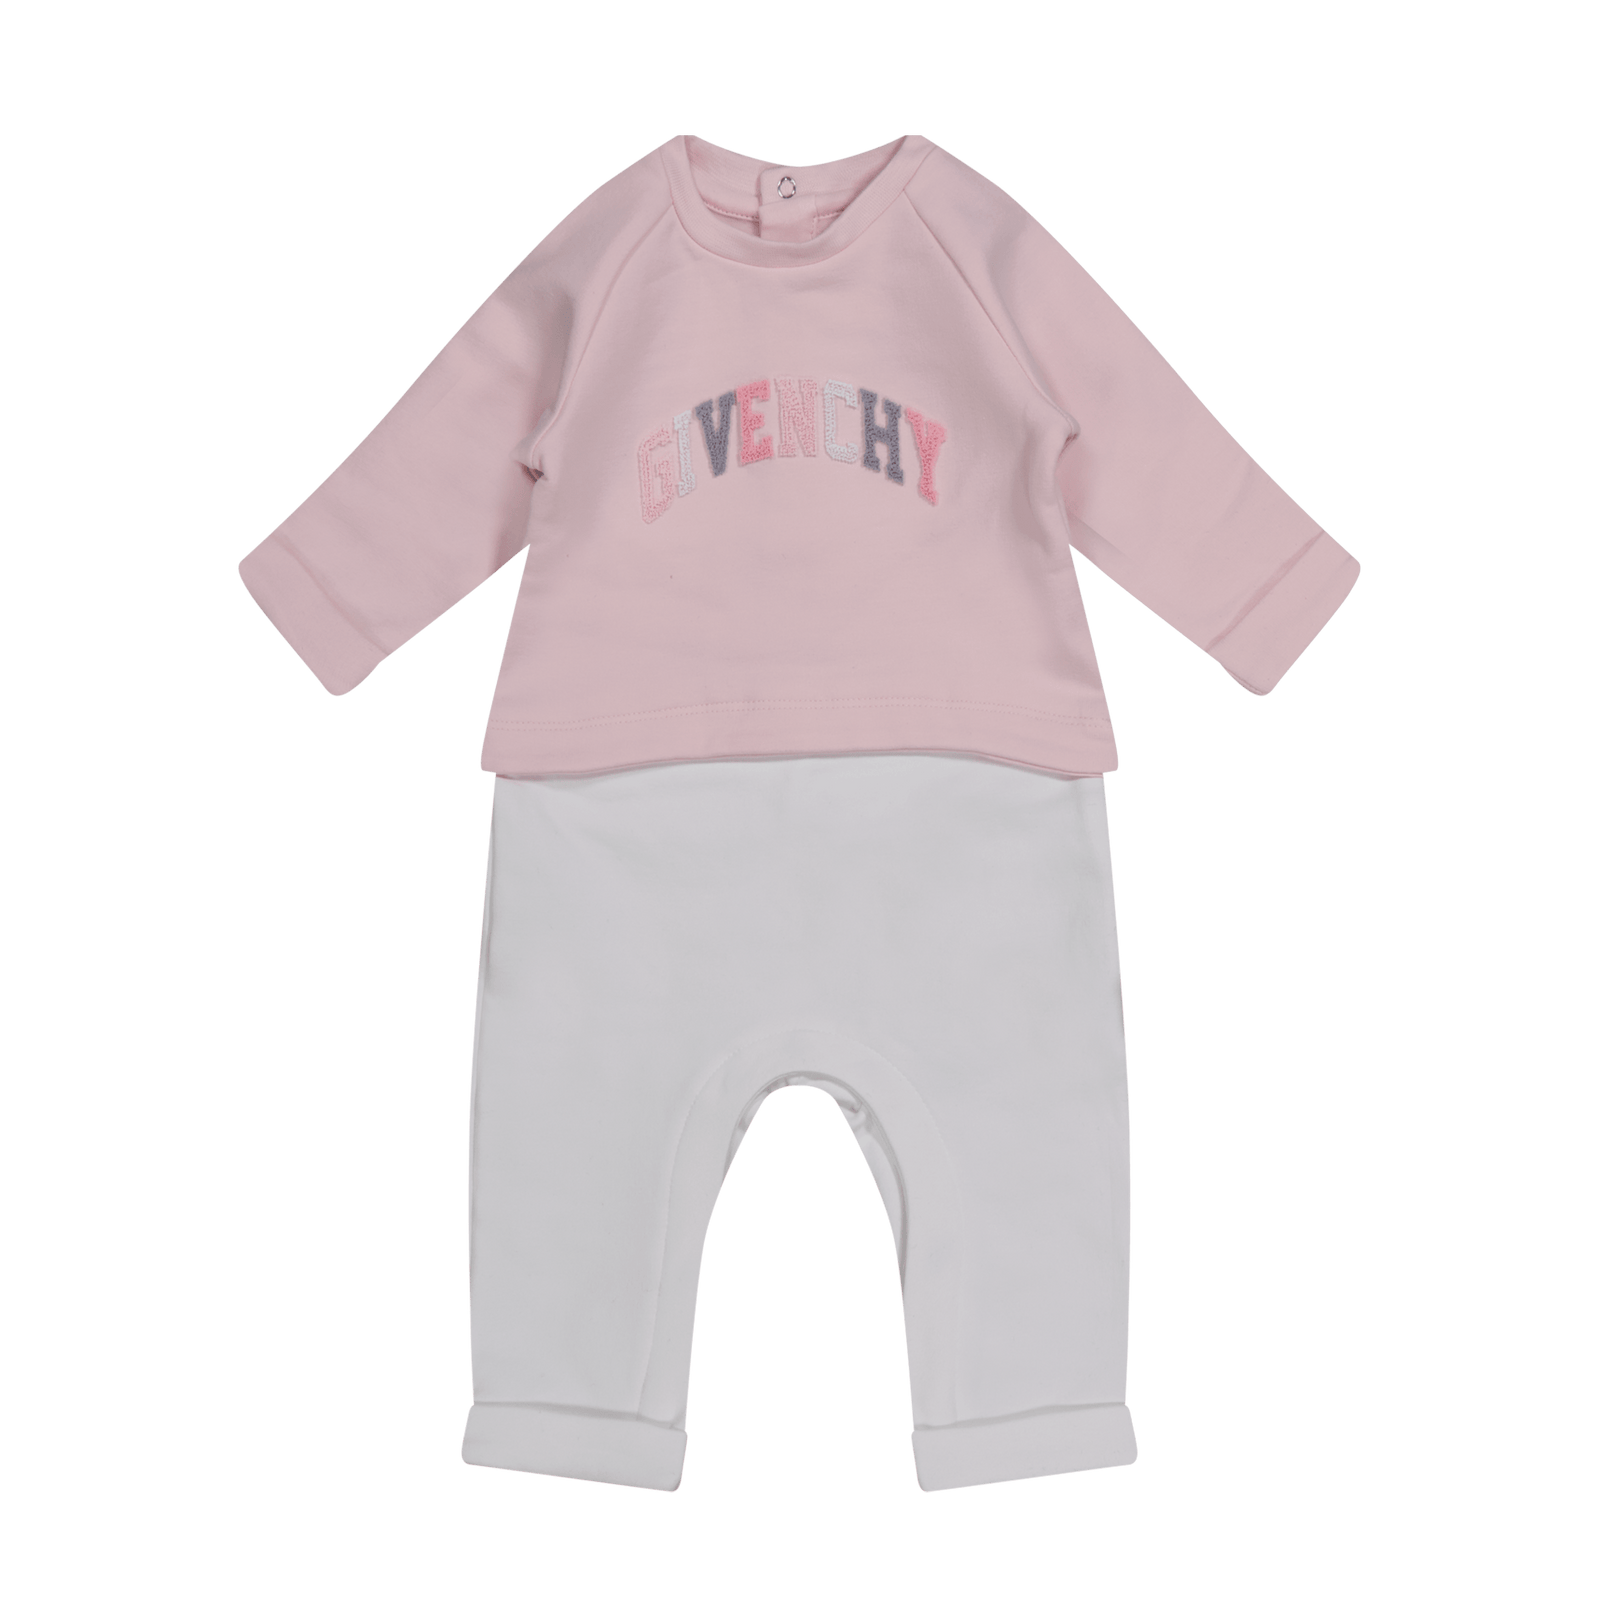 Givenchy Baby Unisex Bodysuit Light Pink